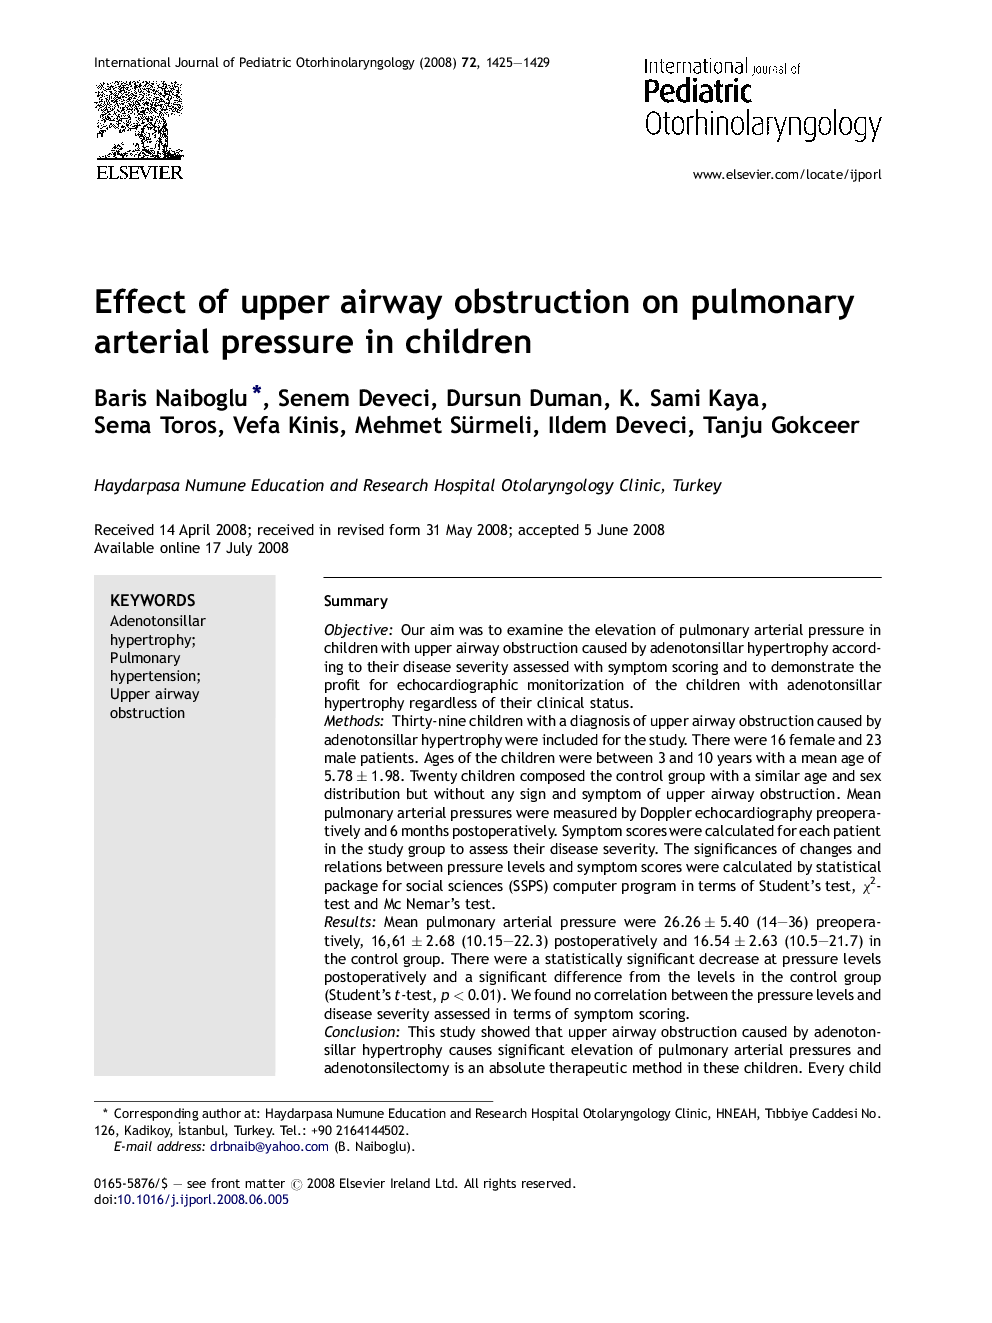 Effect of upper airway obstruction on pulmonary arterial pressure in children